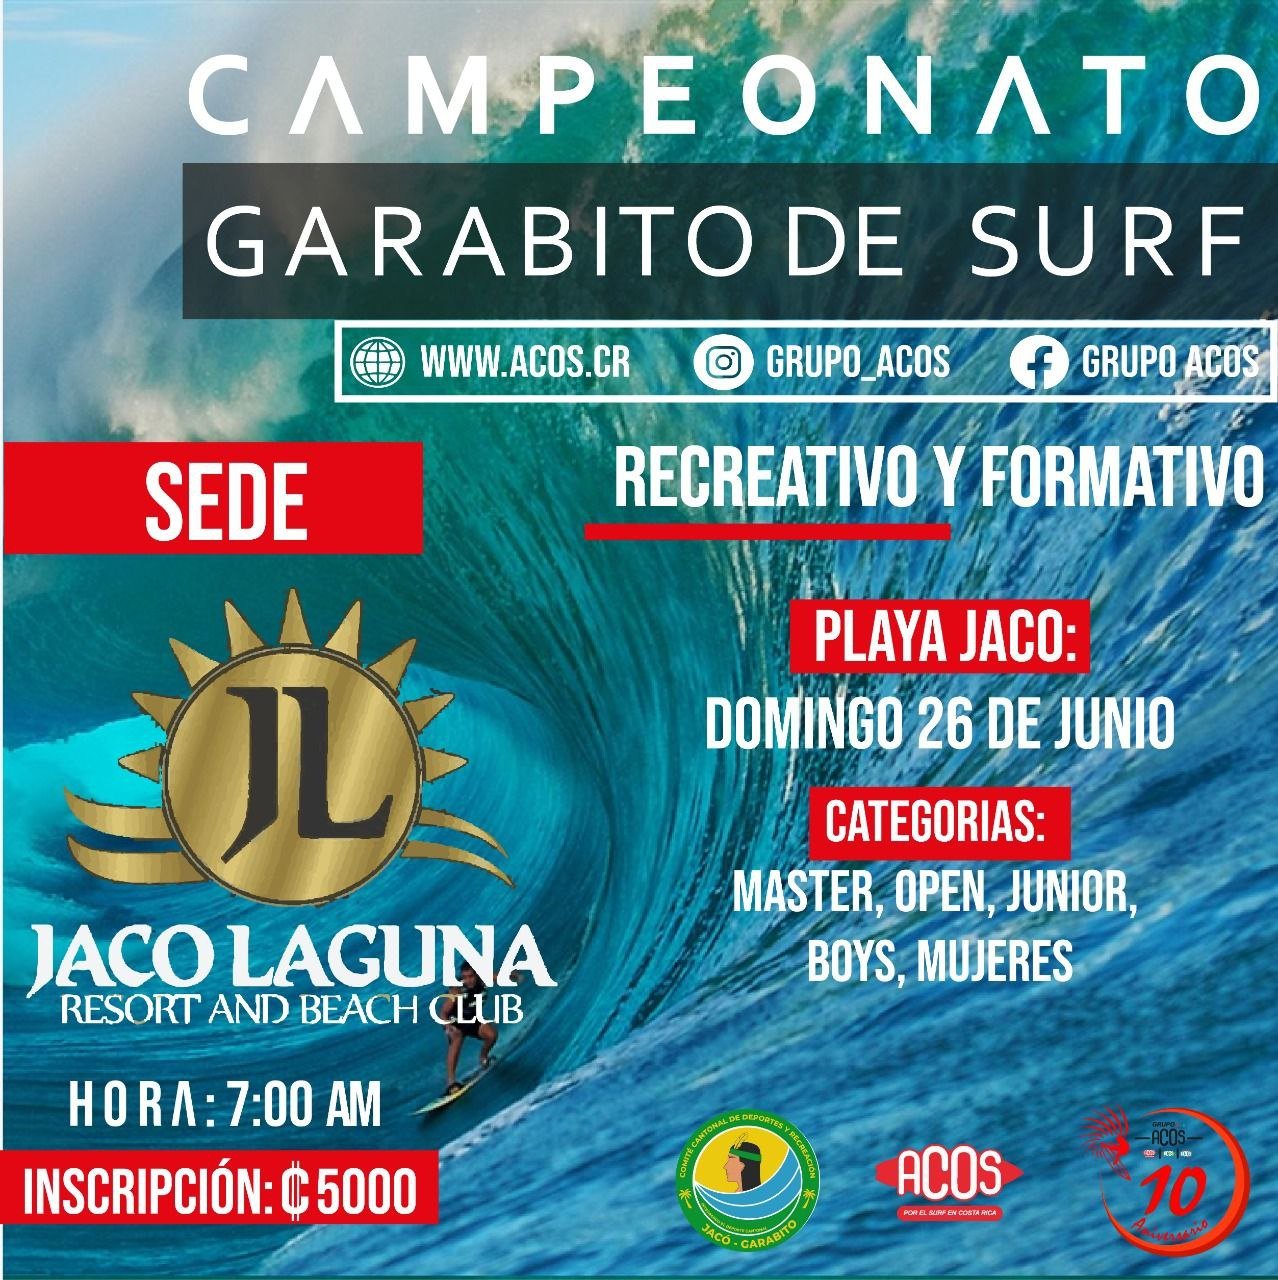 Campeonato de Surf Garabito